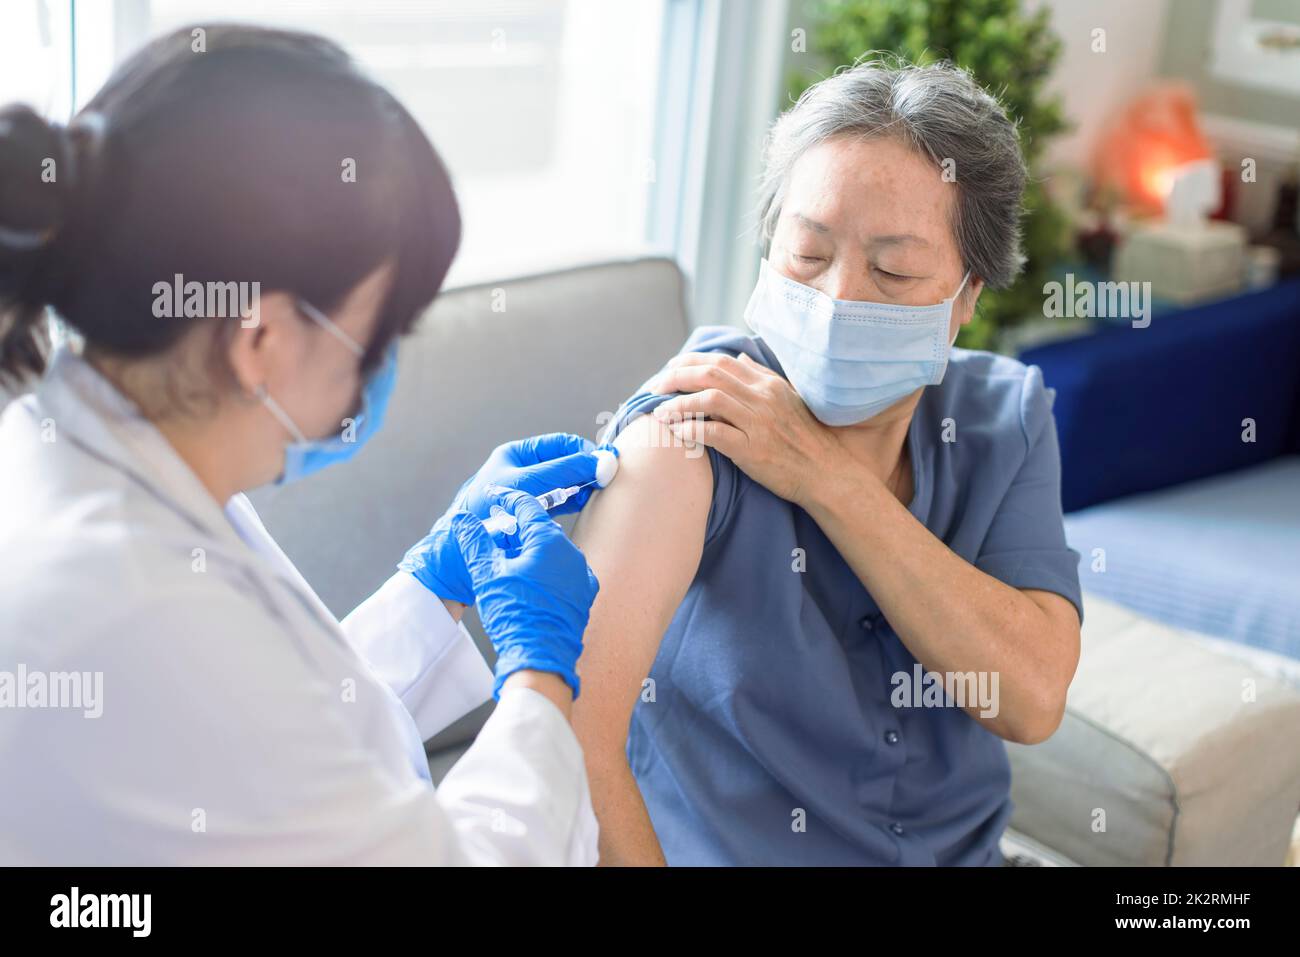 Senior woman receiving vaccine. Medical doctor vaccinating an elderly patient against flu, covid-19, pneumonia or coronavirus. Stock Photo